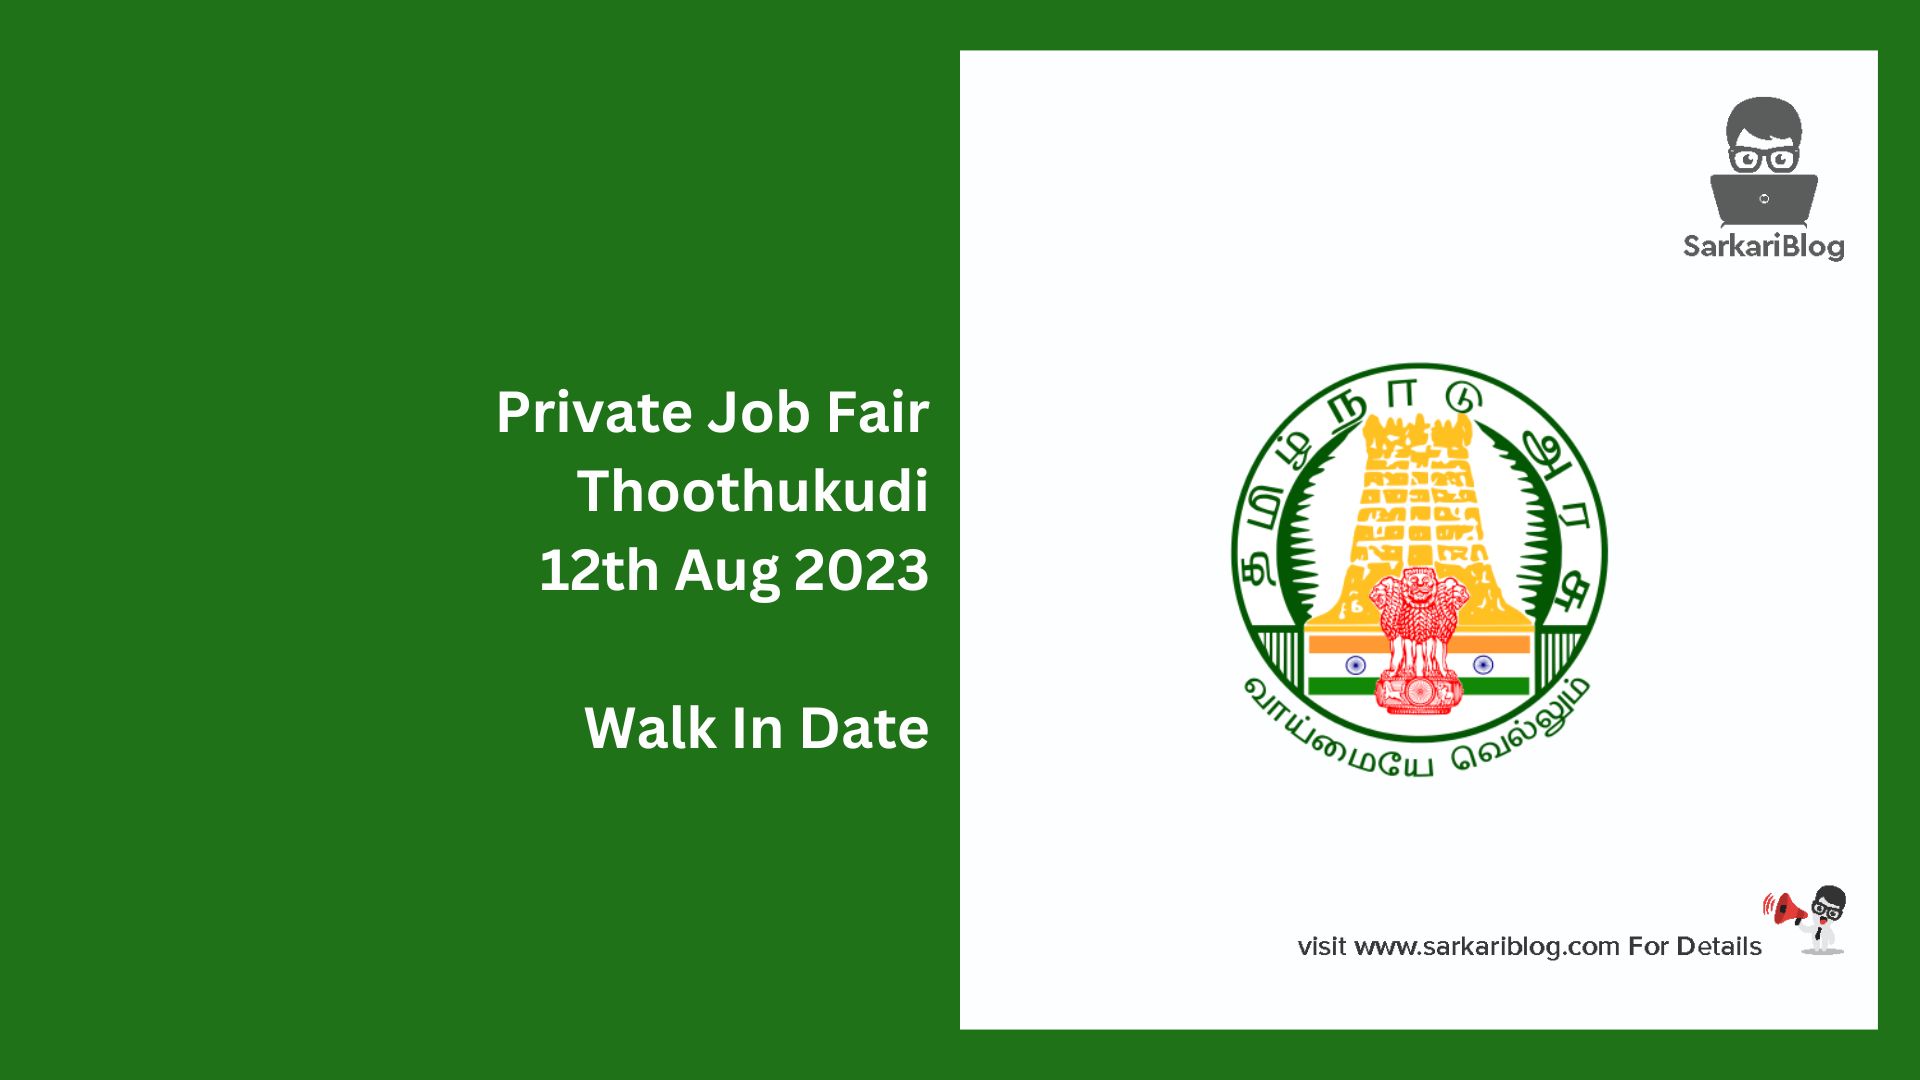 Private Job Fair Thoothukudi 12th Aug 2023